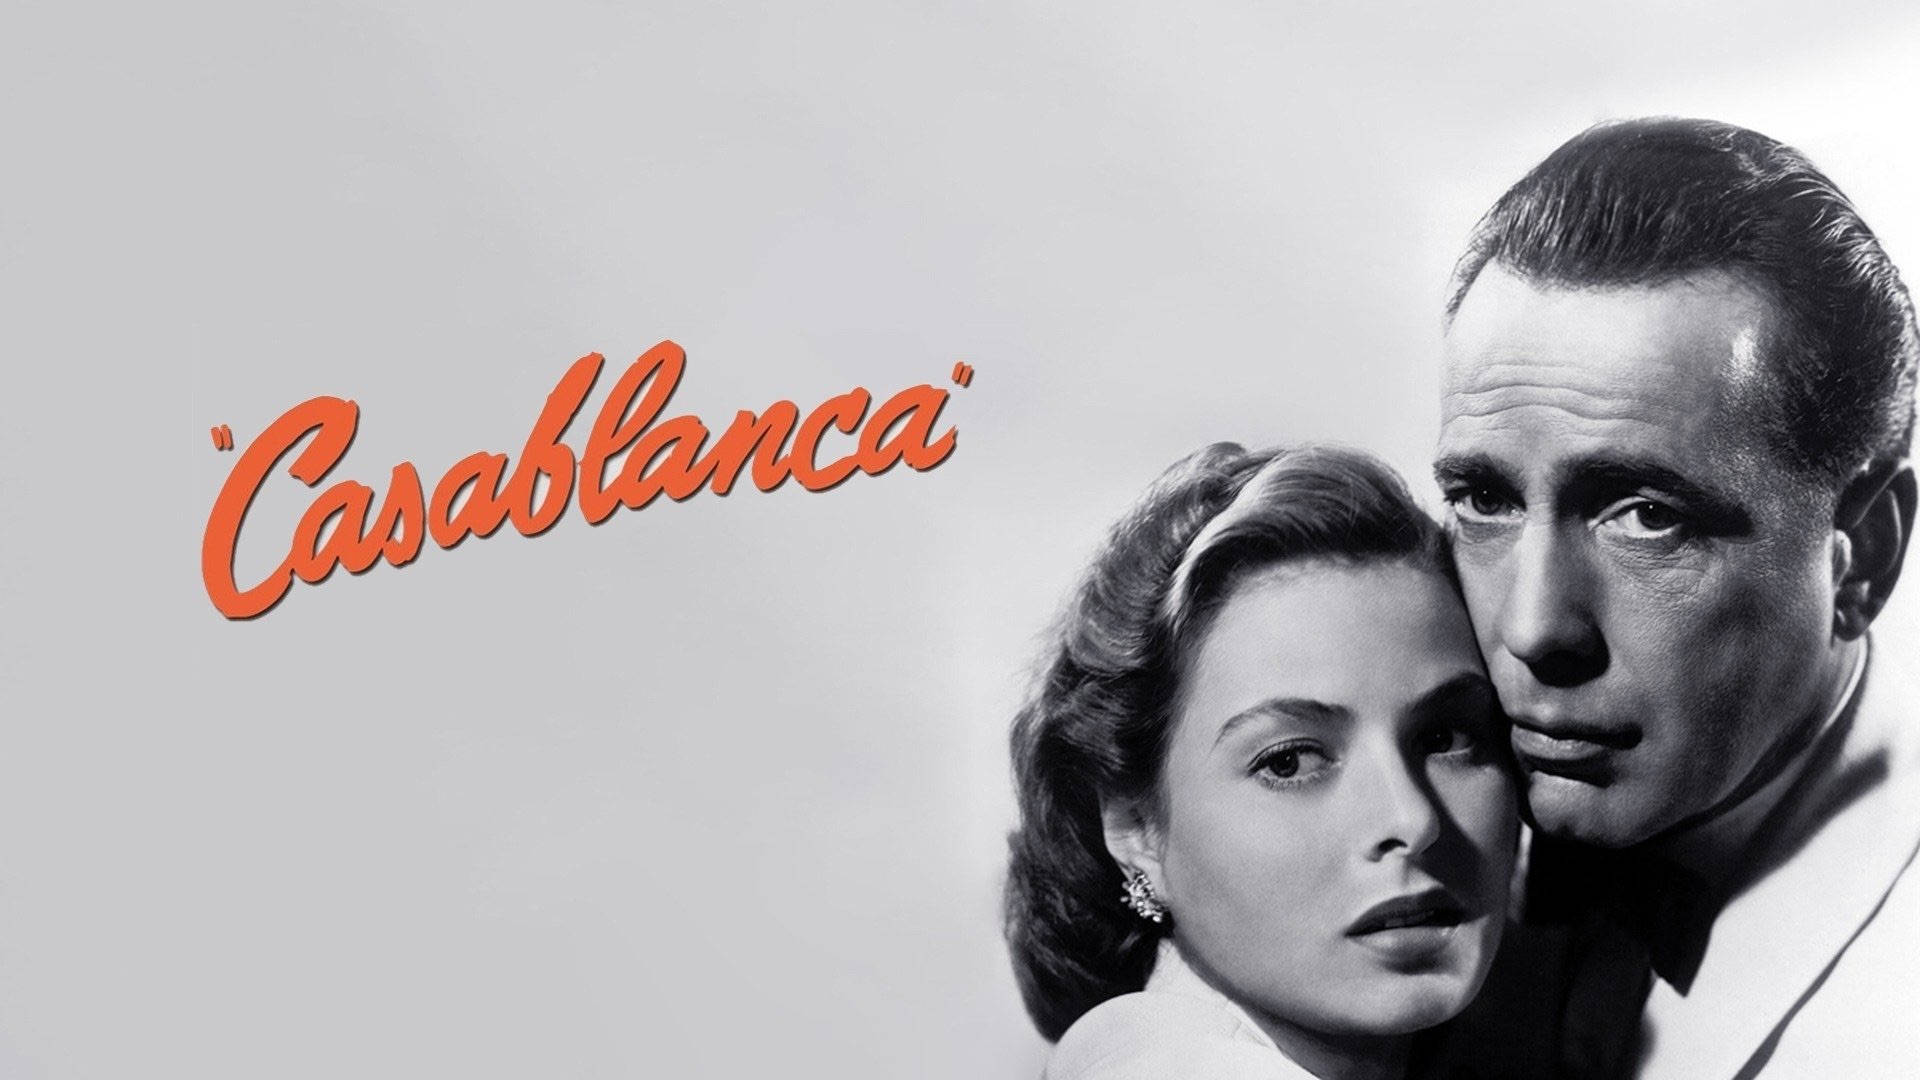 Casablanca Gray Aesthetic Background